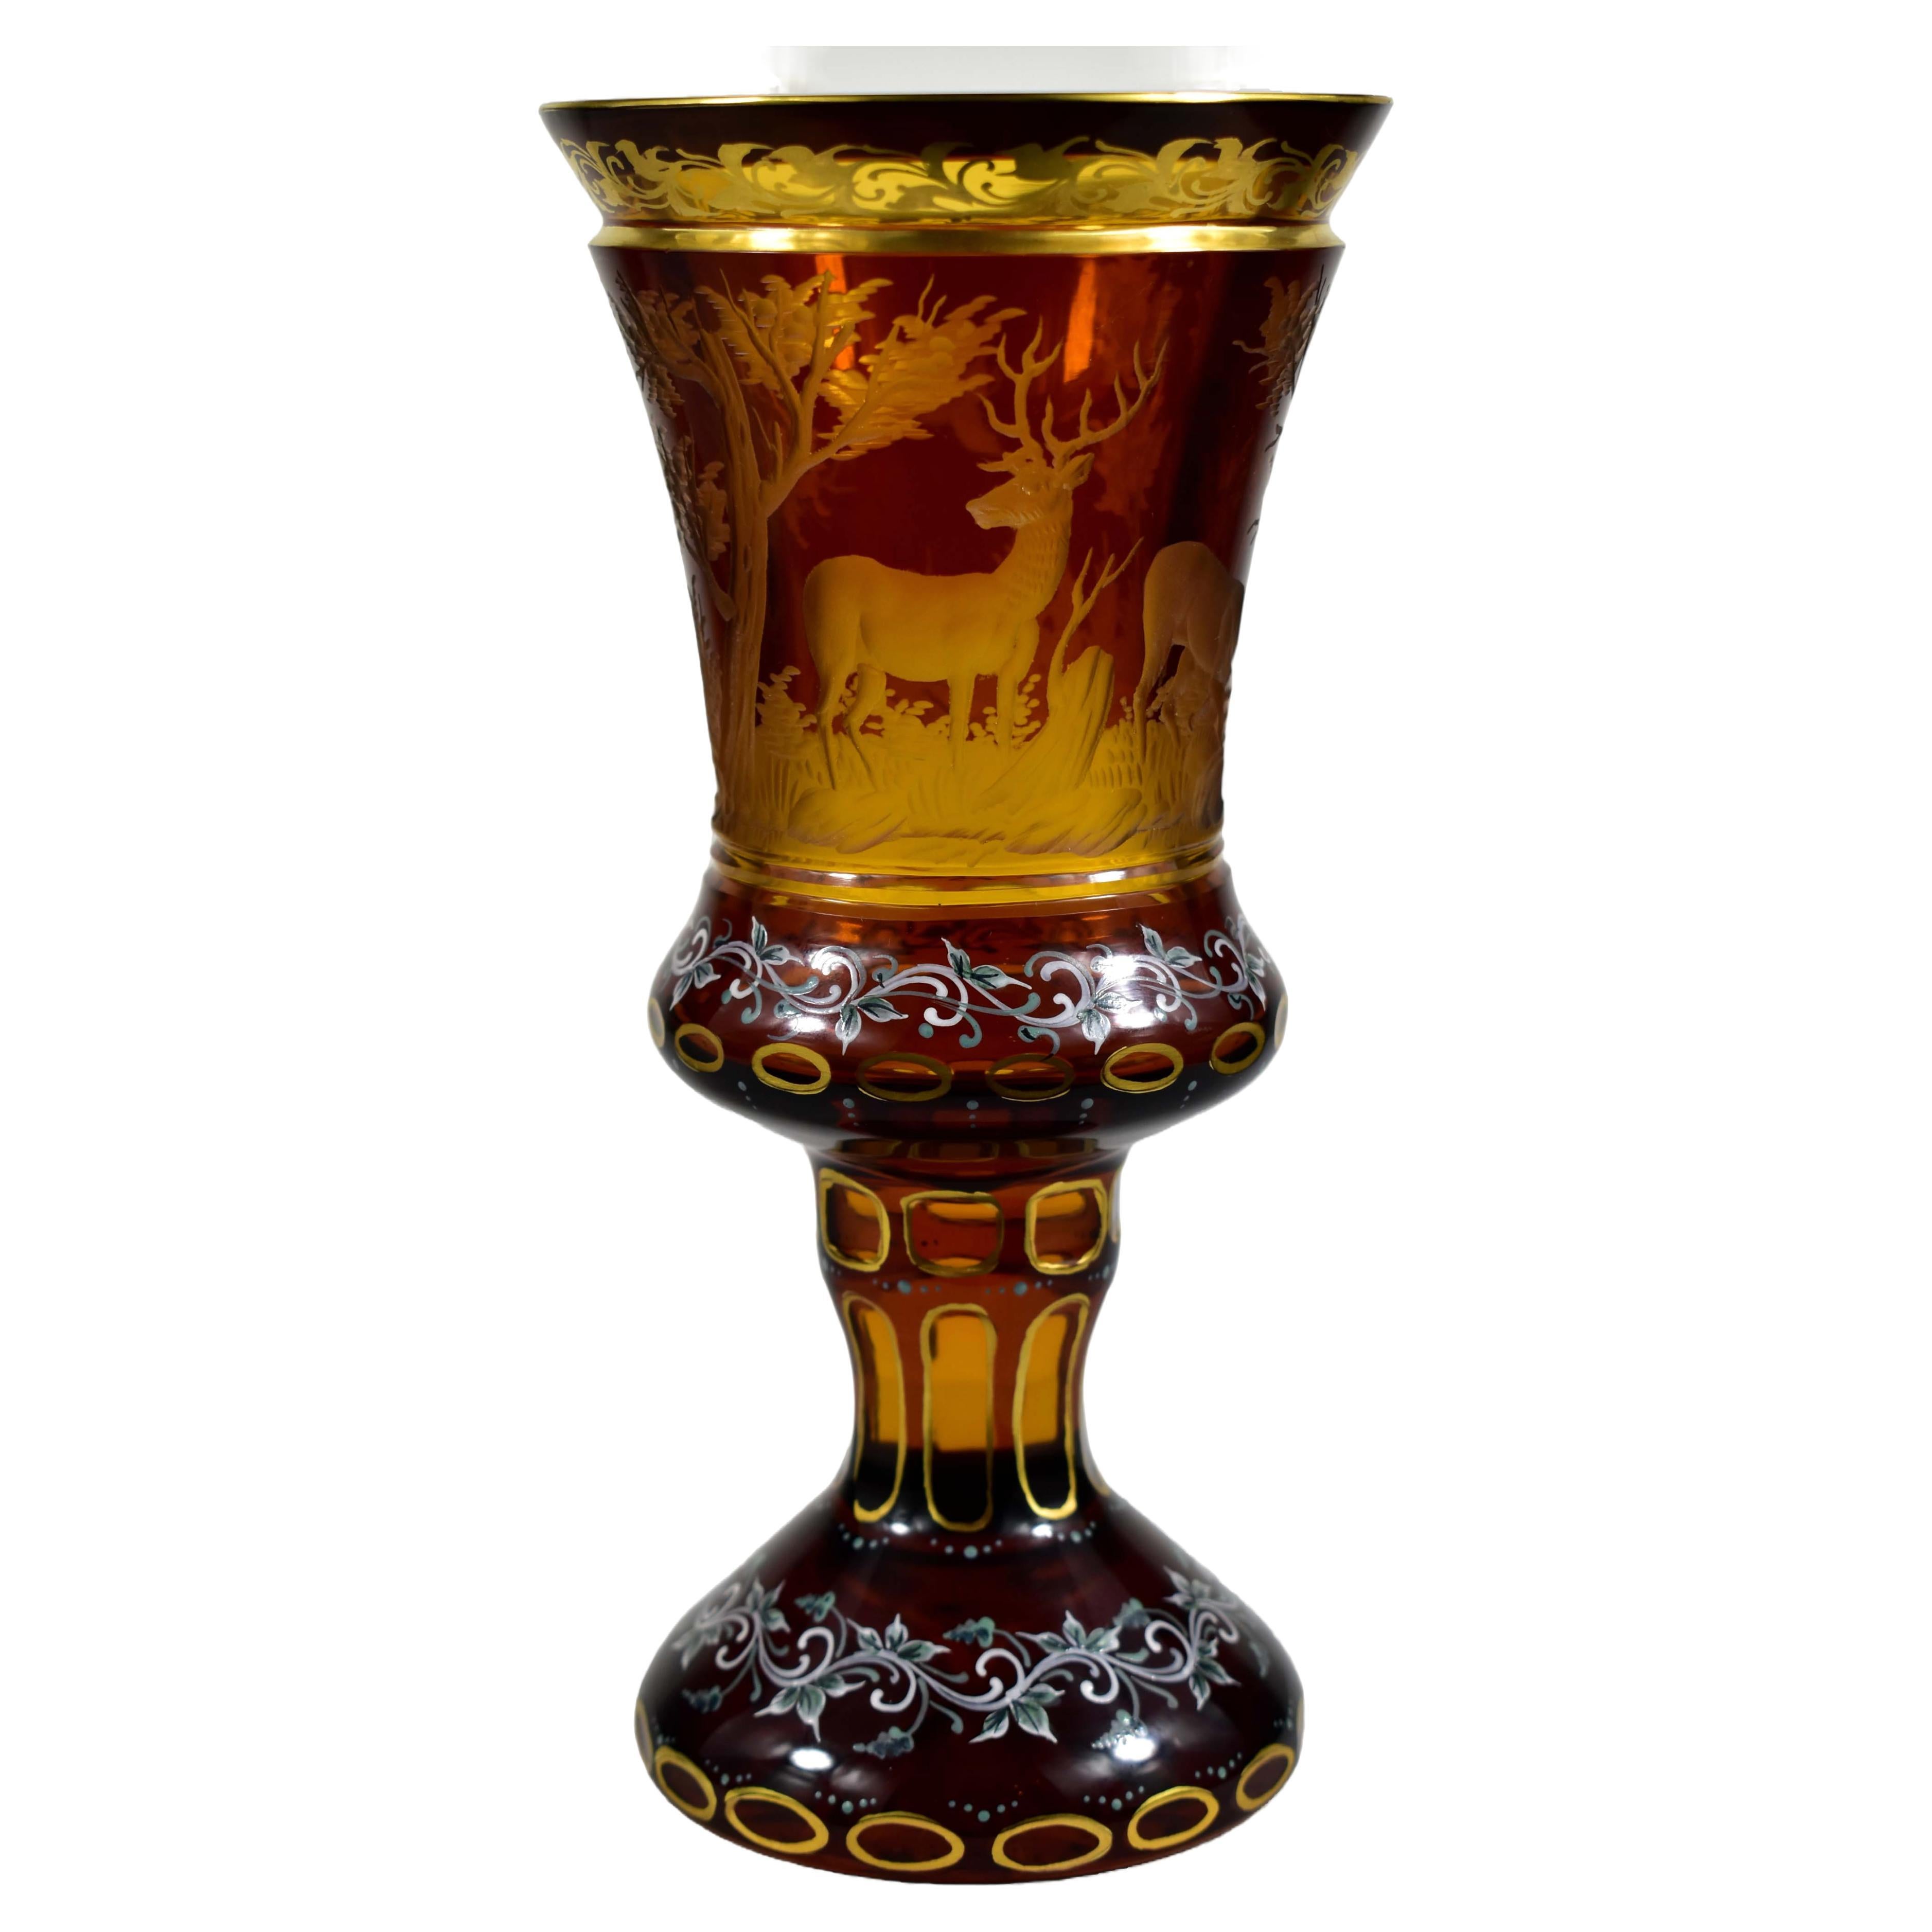 Amber Glass Goblet- Hunting motif - Bohemian Glass - 19-20 century